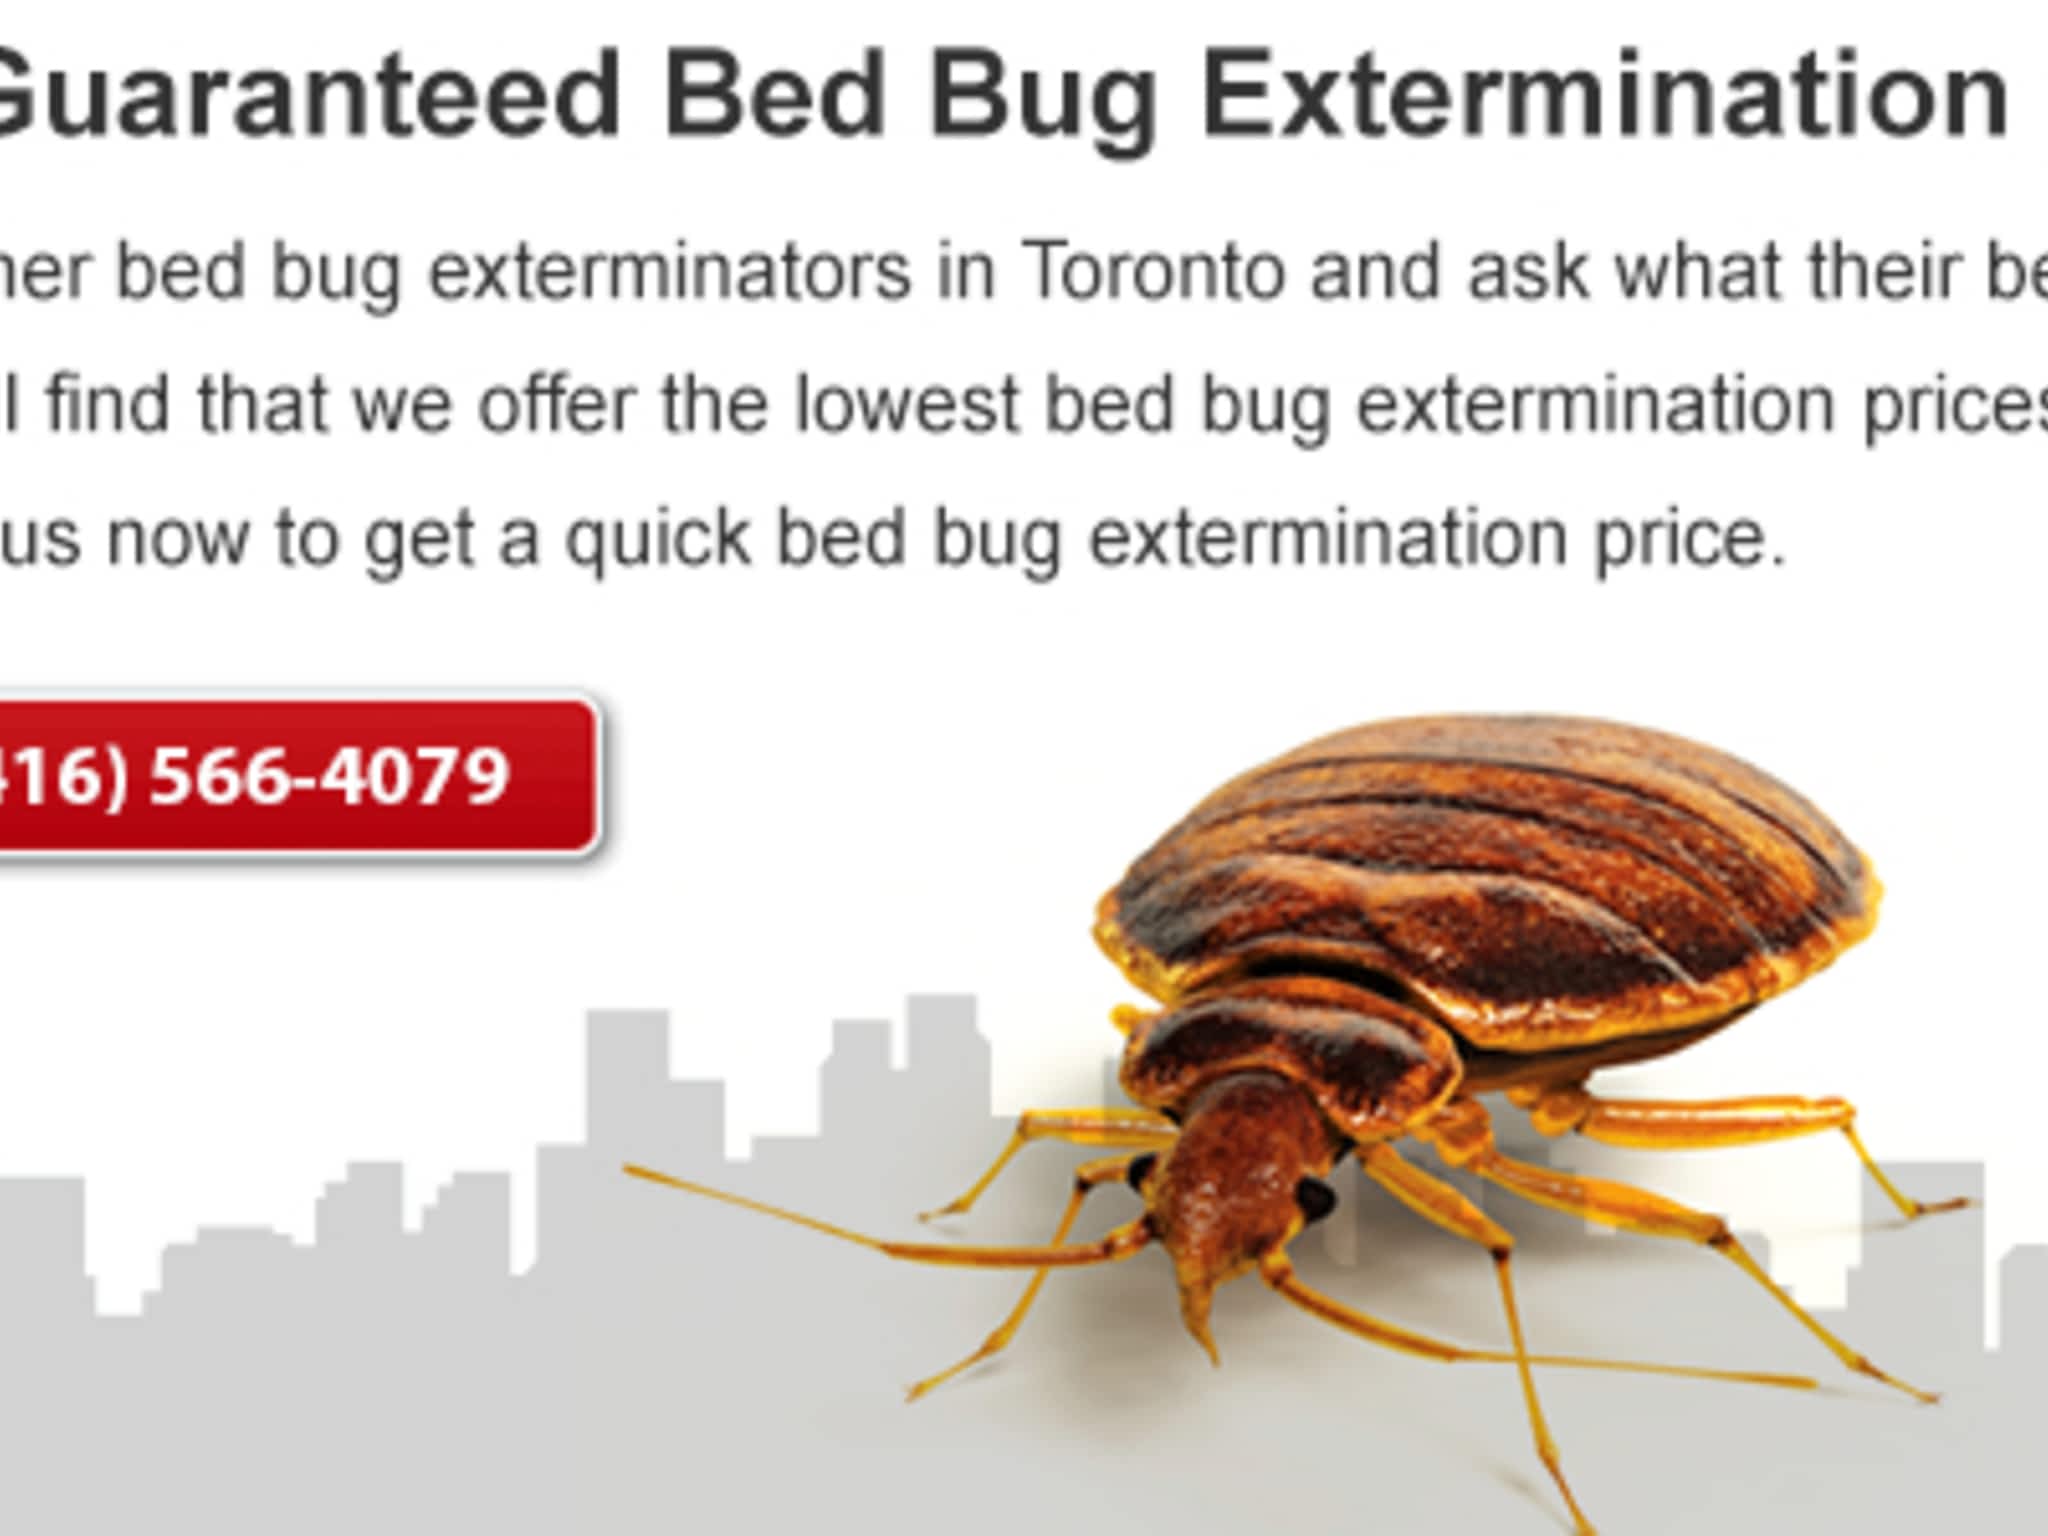 photo Bed Bug Exterminator Pro